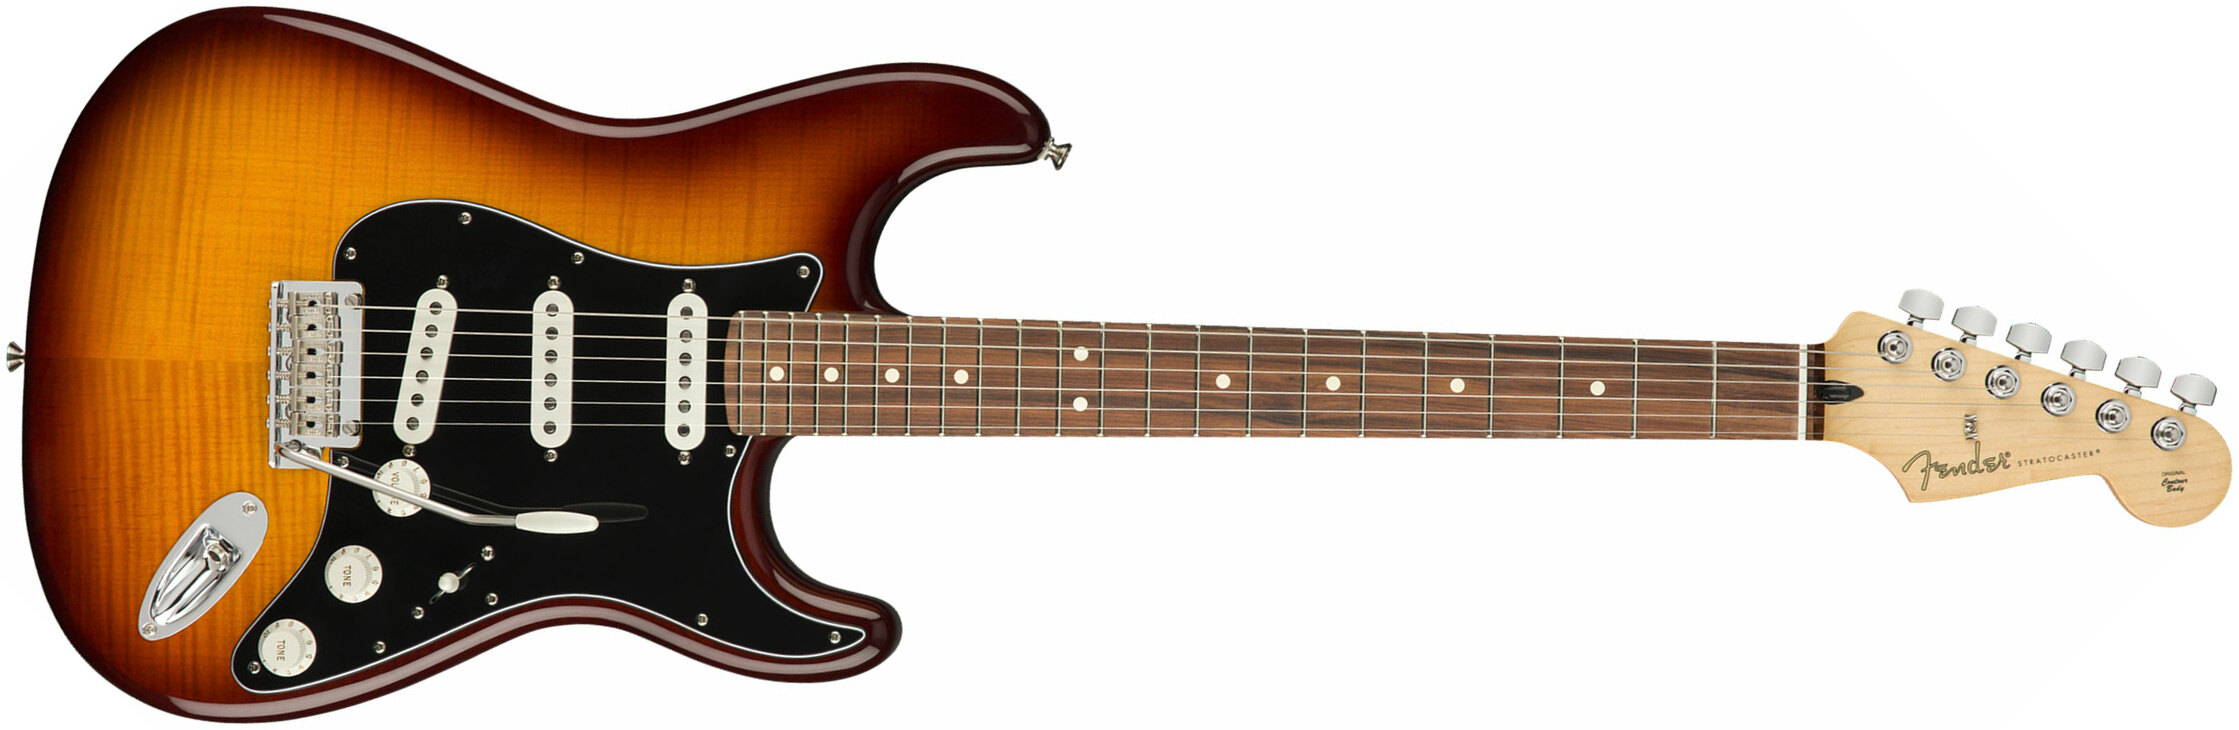 Fender Strat Player Plus Top Mex 3s Trem Pf - Tobacco Burst - E-Gitarre in Str-Form - Main picture